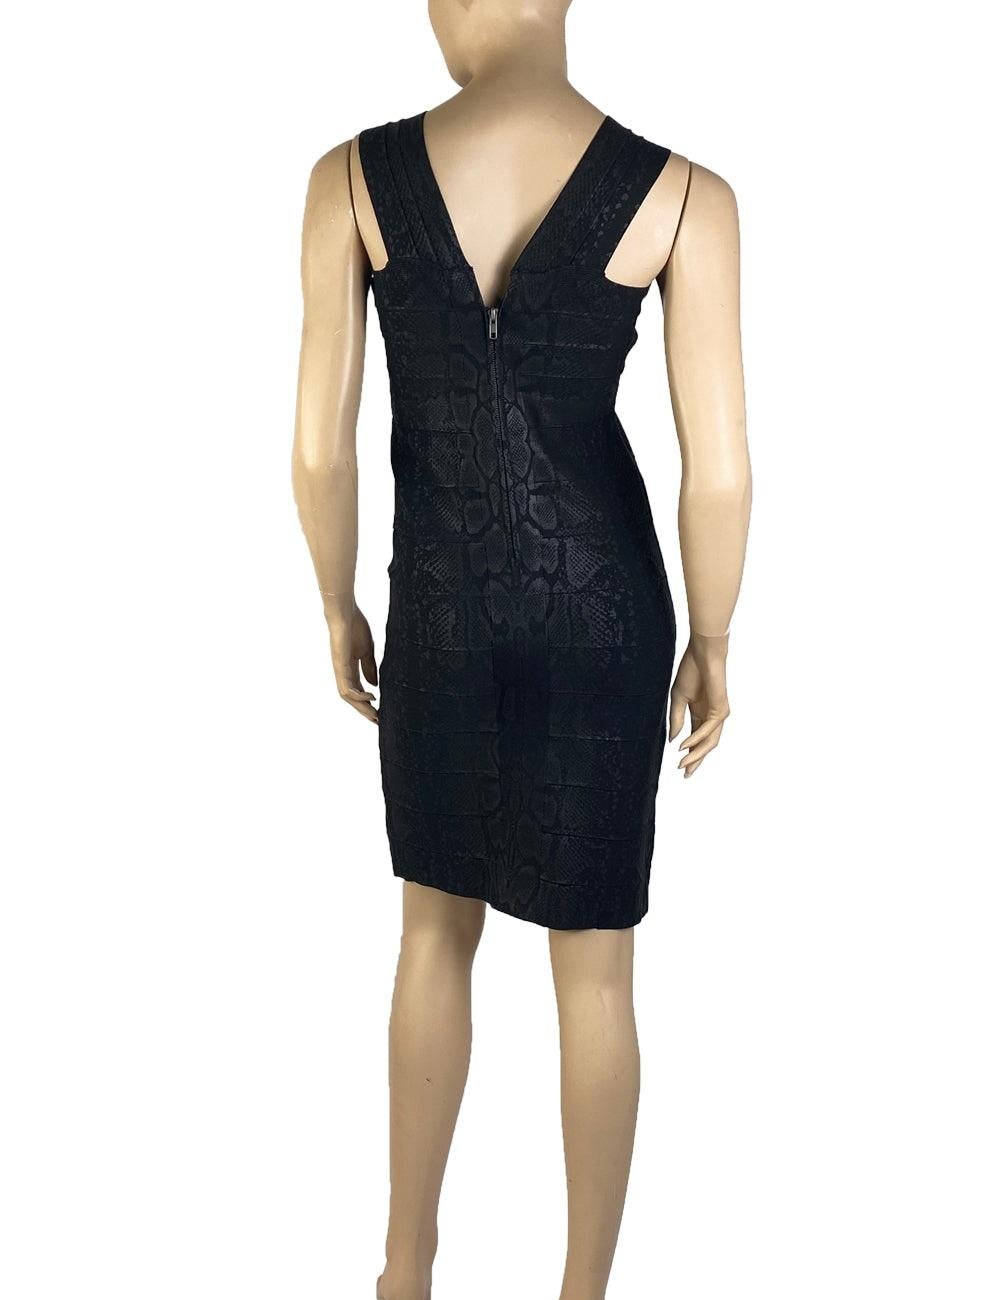 Alberto Makali Black Bandage Dress In Fair Condition For Sale In Amman, JO